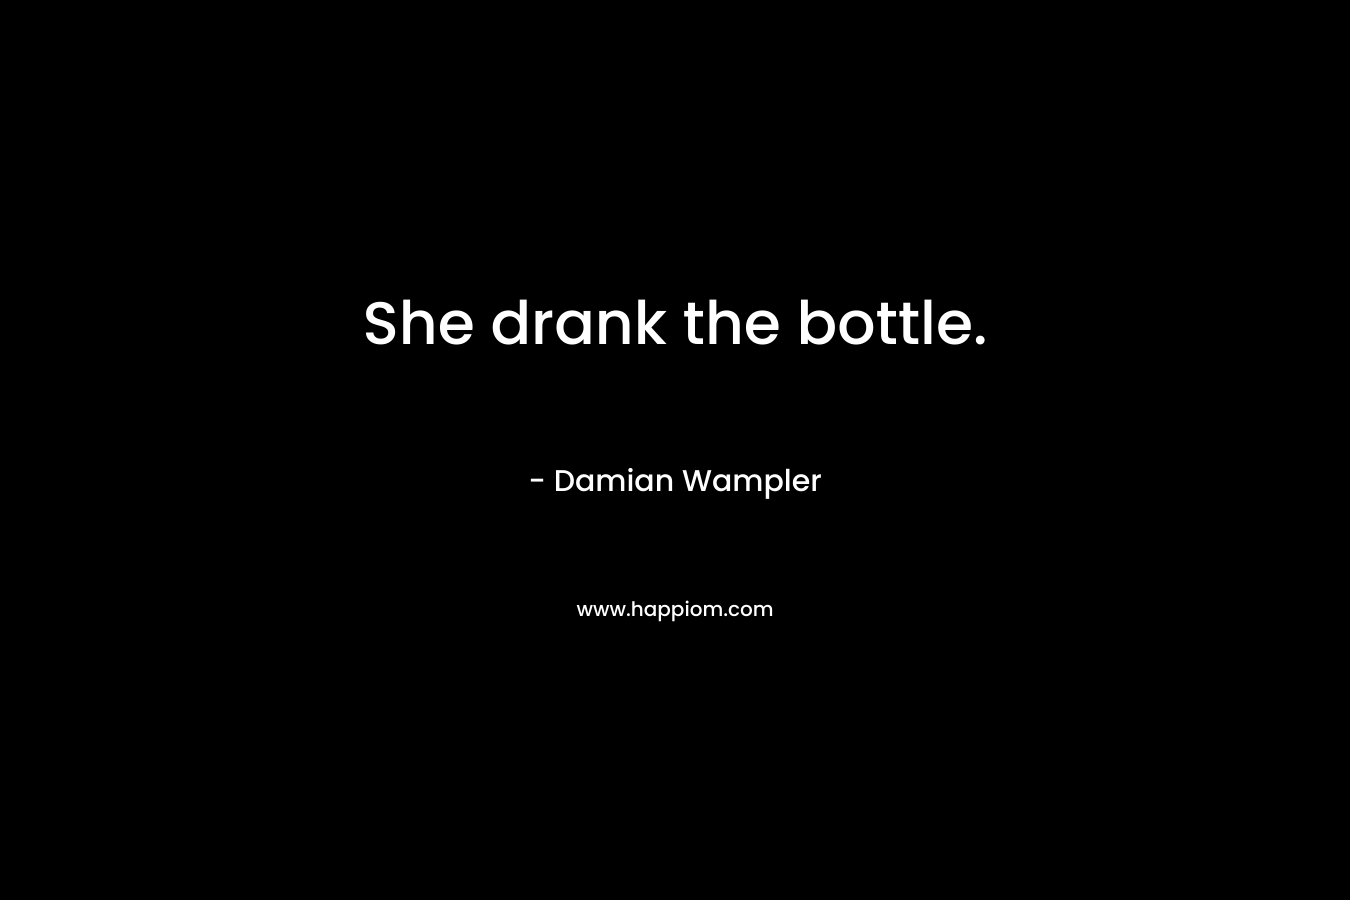 She drank the bottle.